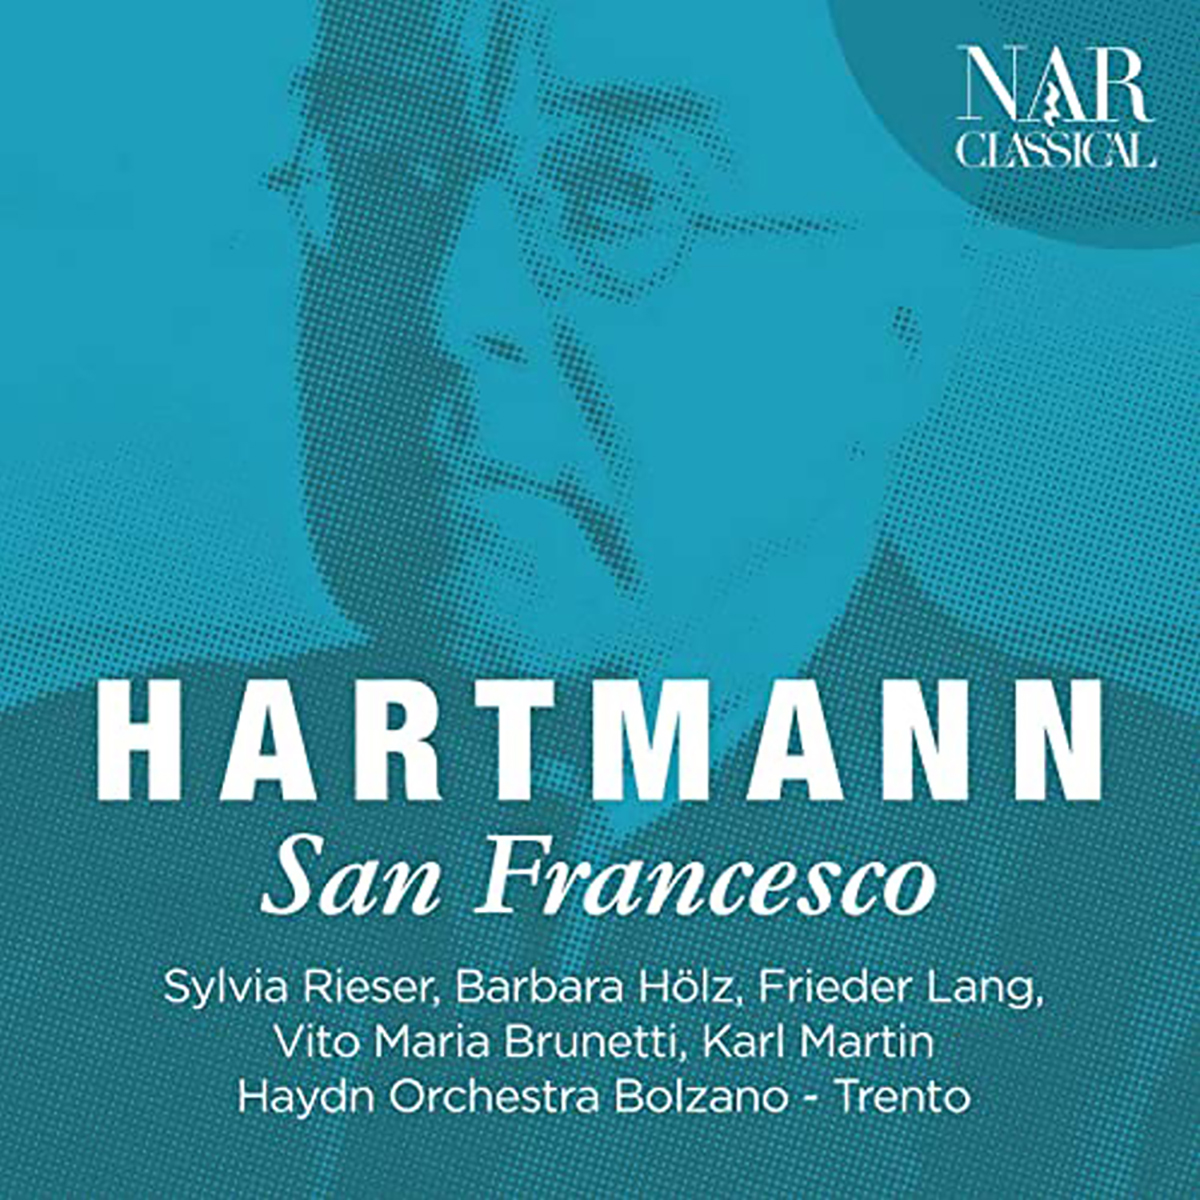 Hartmann - San Francesco